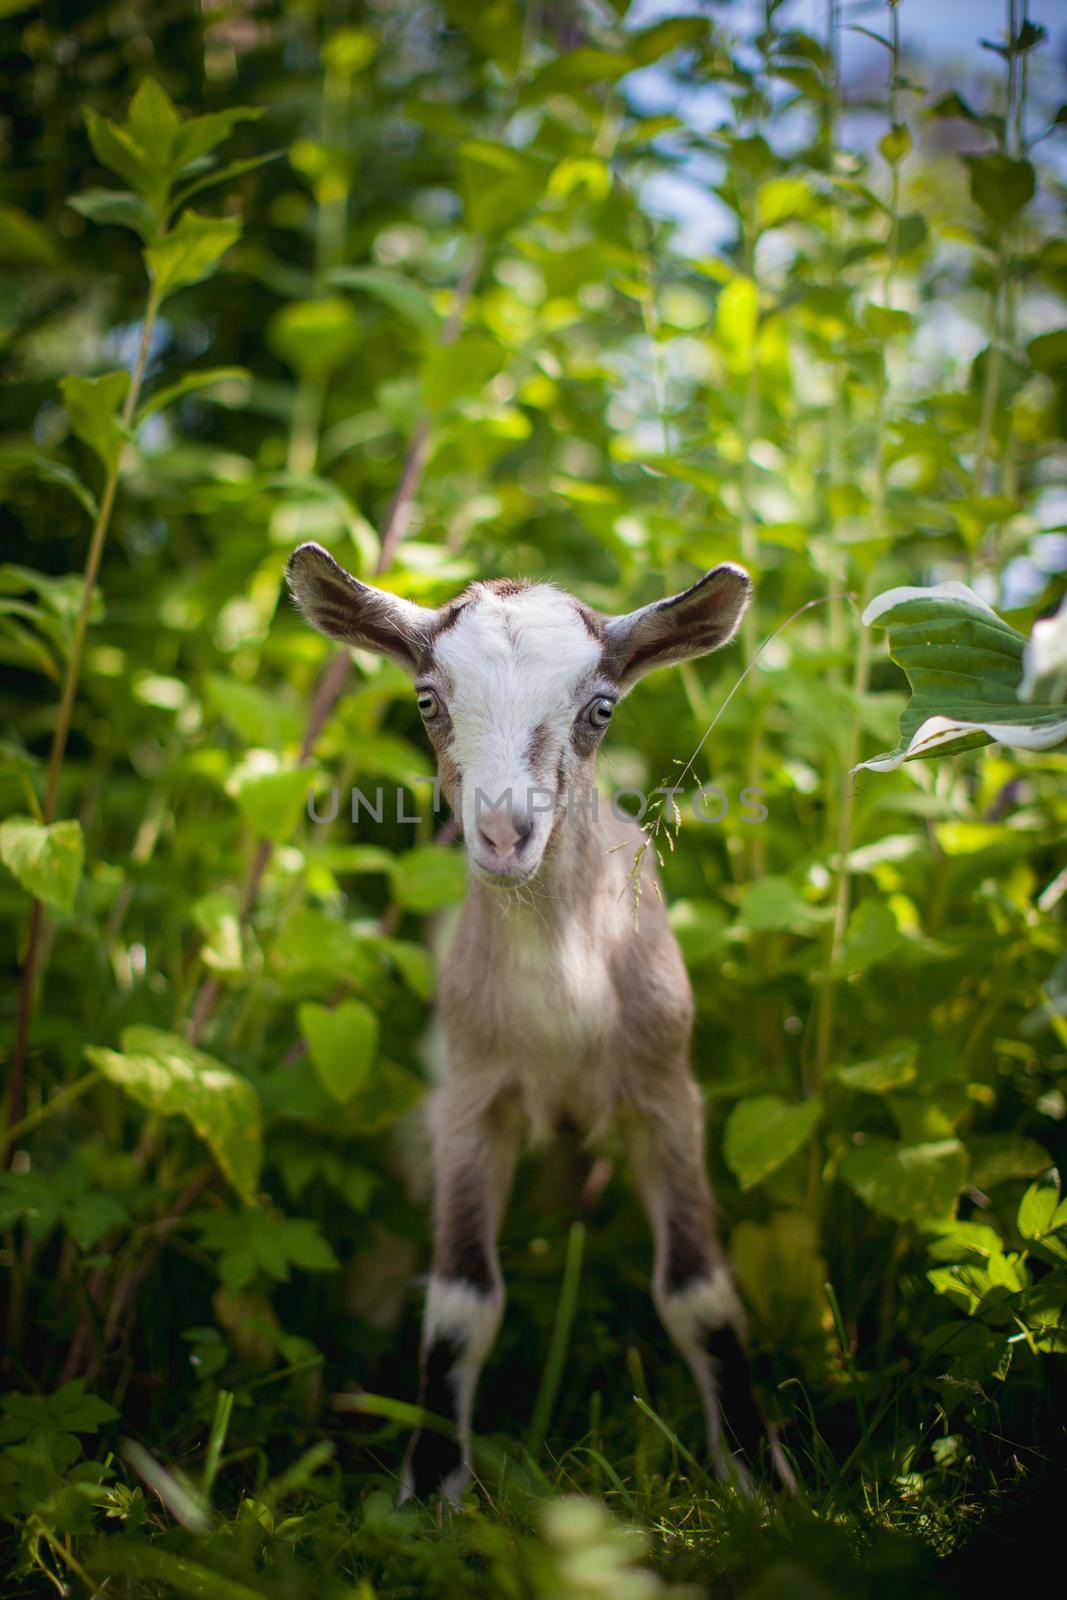 Cute young grey goatling standing in a garden